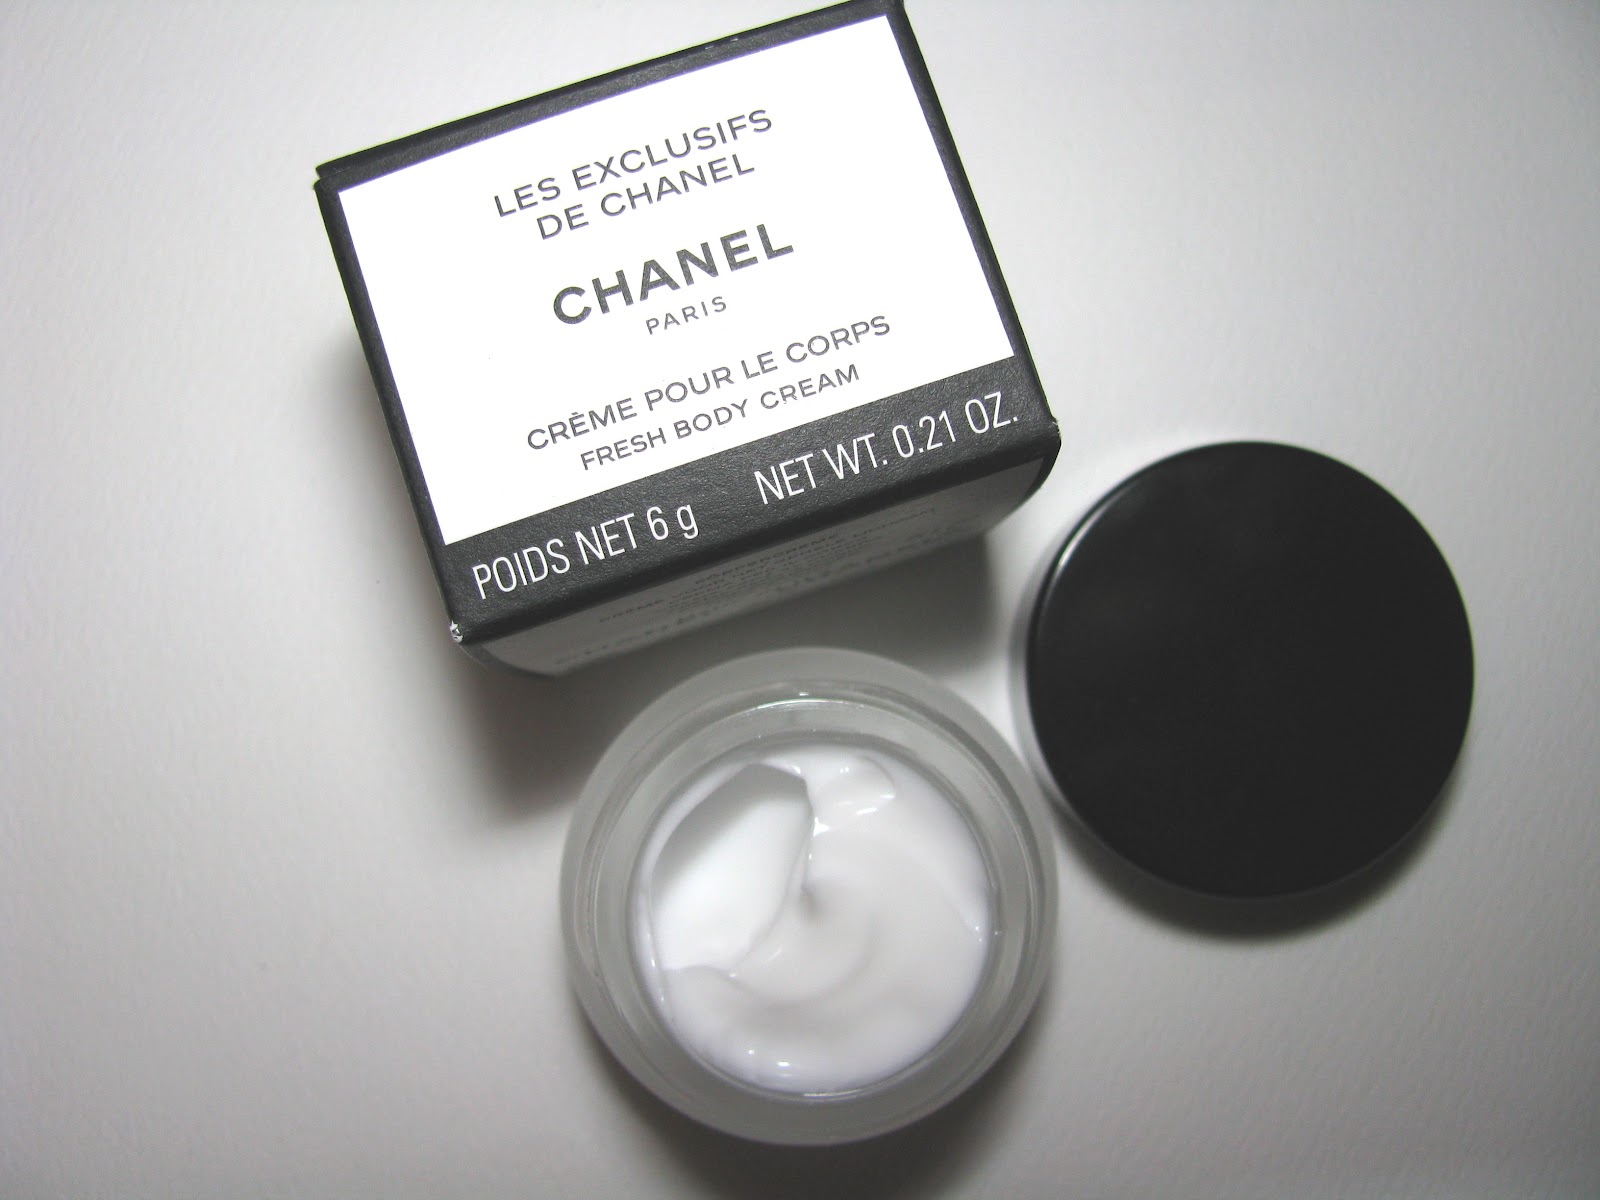 Увлажняющий крем для тела усиливающий запах парфюмерии Chanel Les Exclusifs  De Chanel Fresh Body Cream